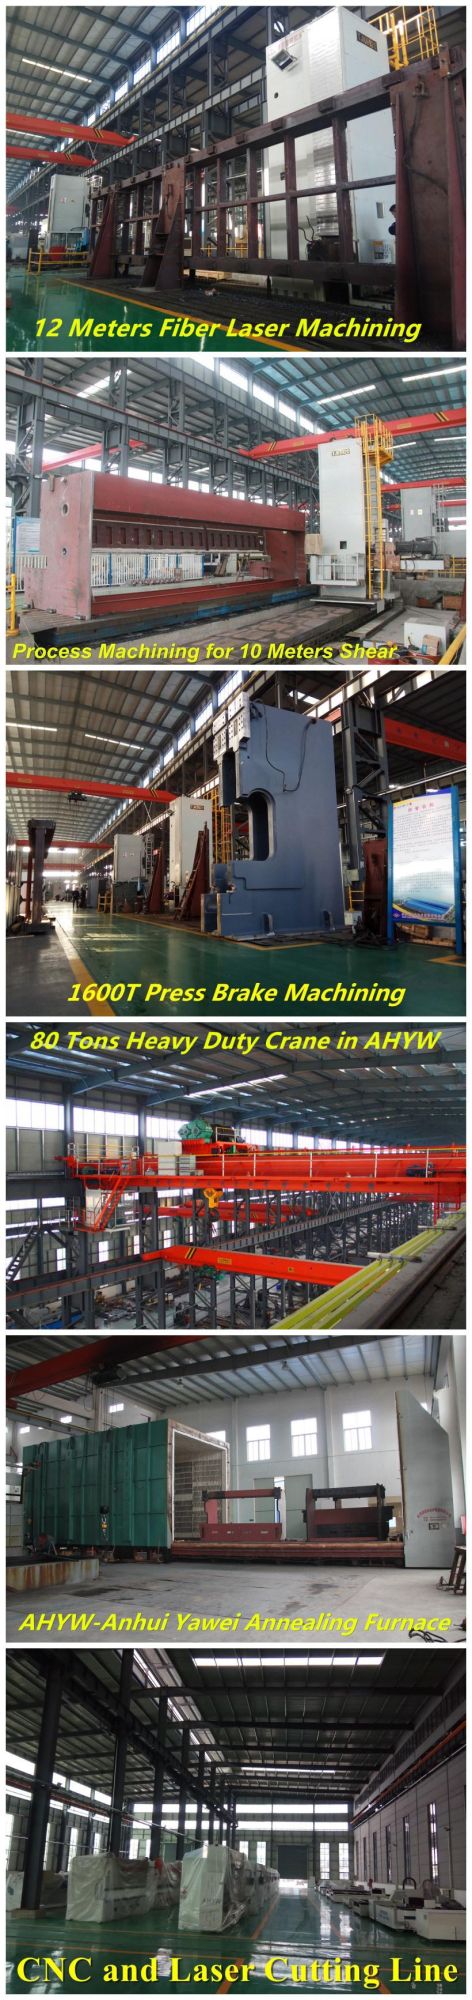 Schiavi Press Brake with Tandem for Lighting Pole From Anhui Yawei Machinery